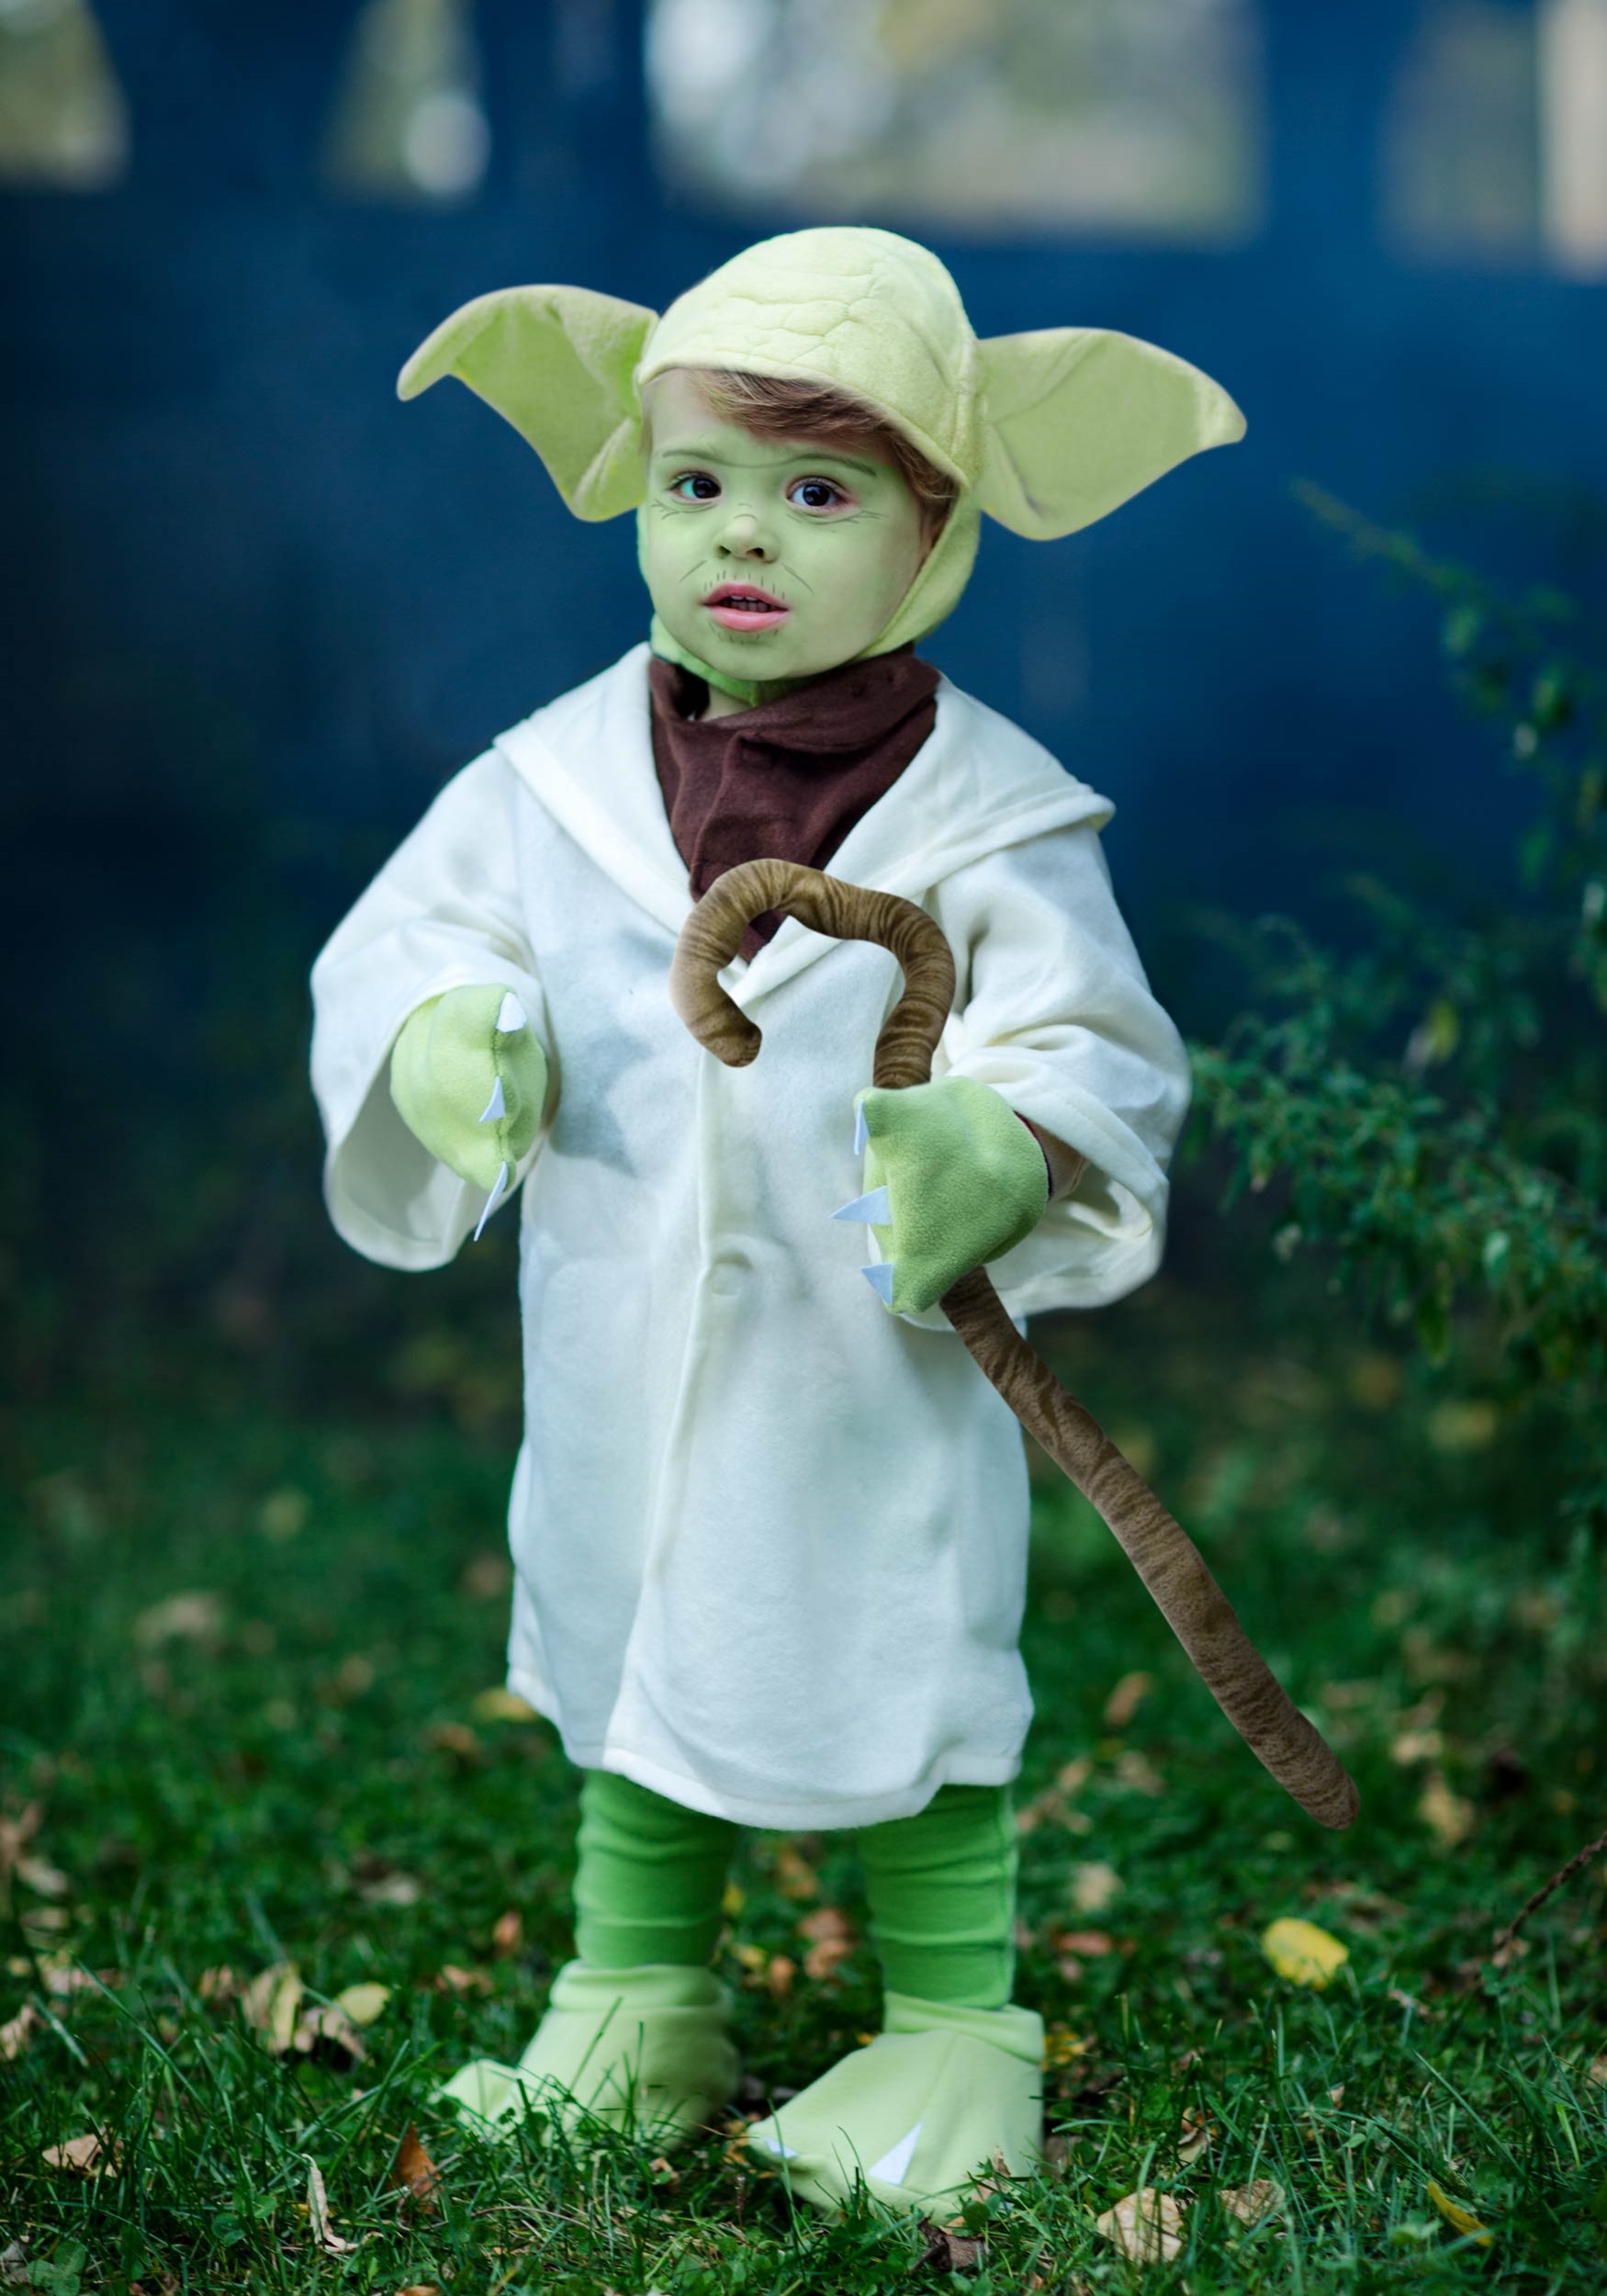 Disfraz 'Baby Yoda